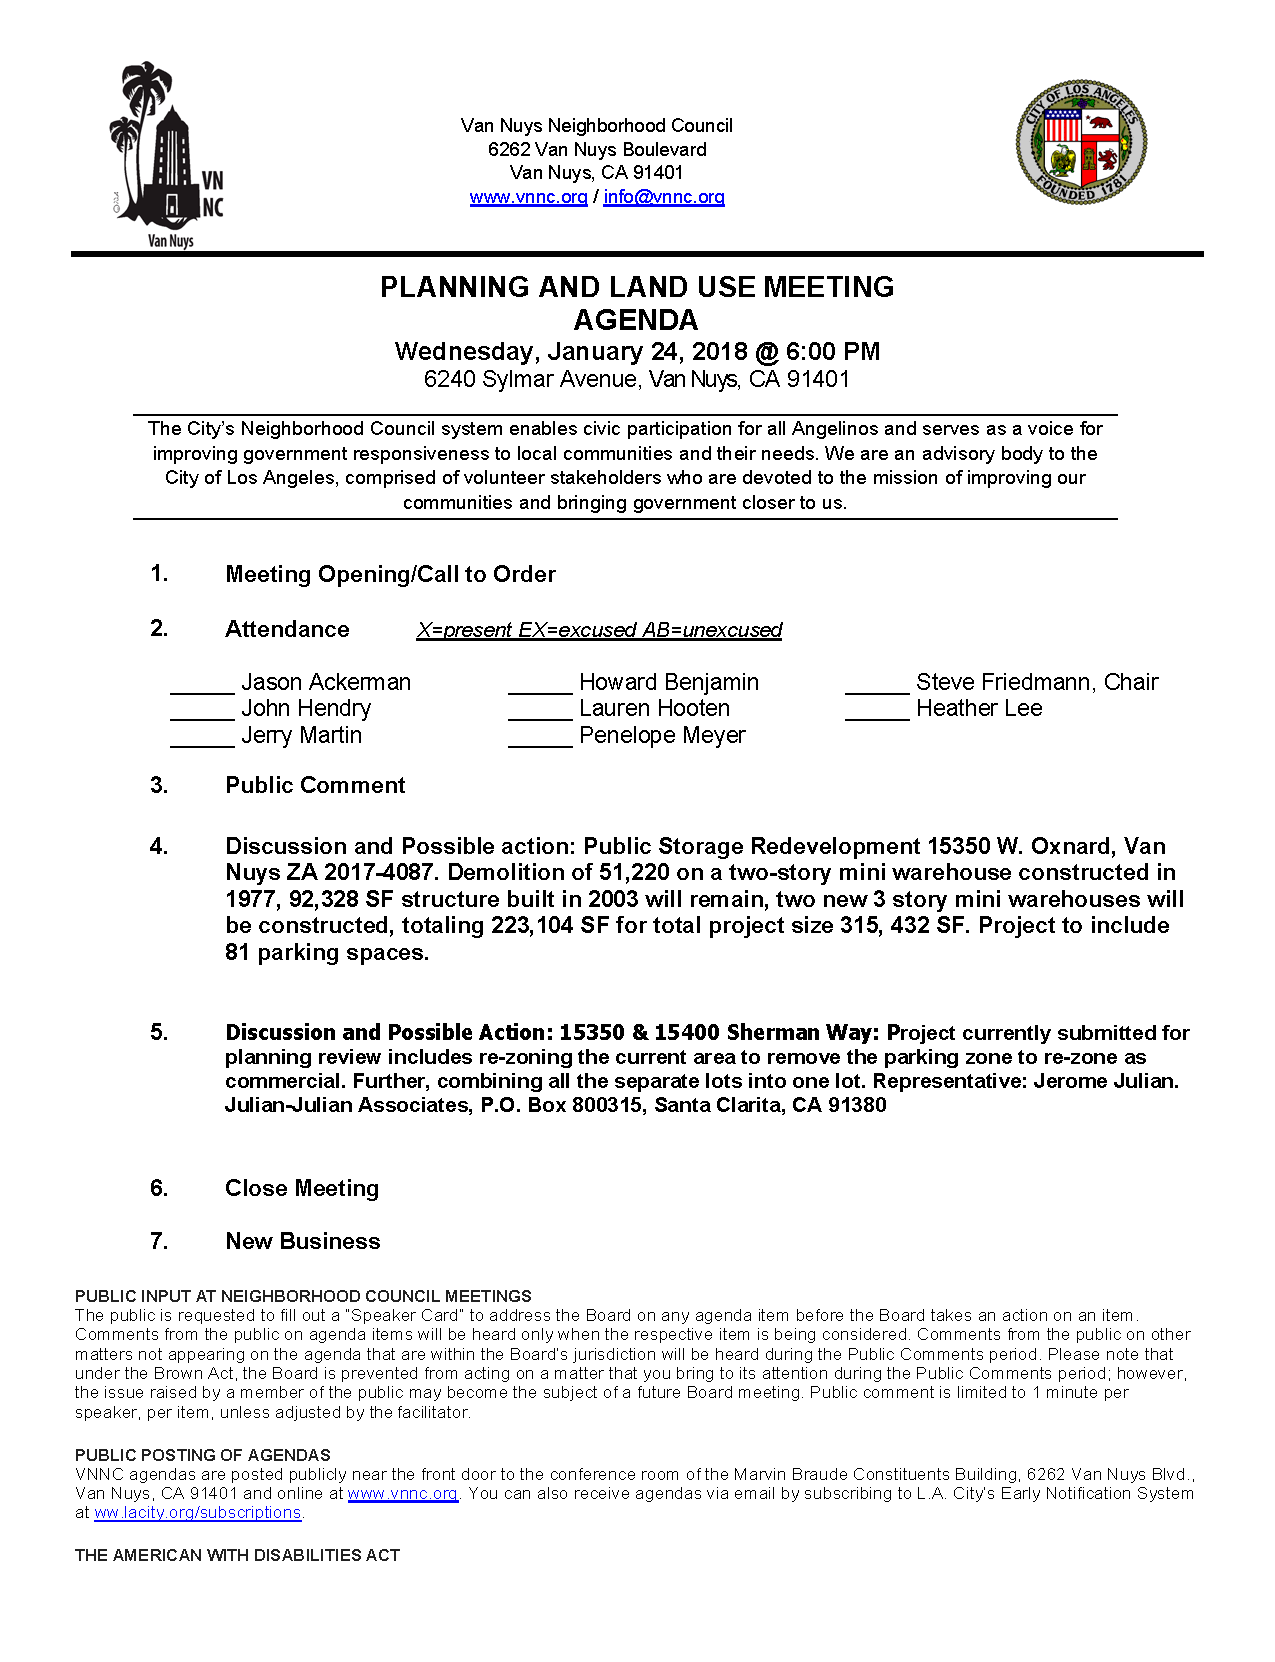 Van Nuys Neighborhood Council Planning and Land Use Meeting Agenda ... عوامات اطفال